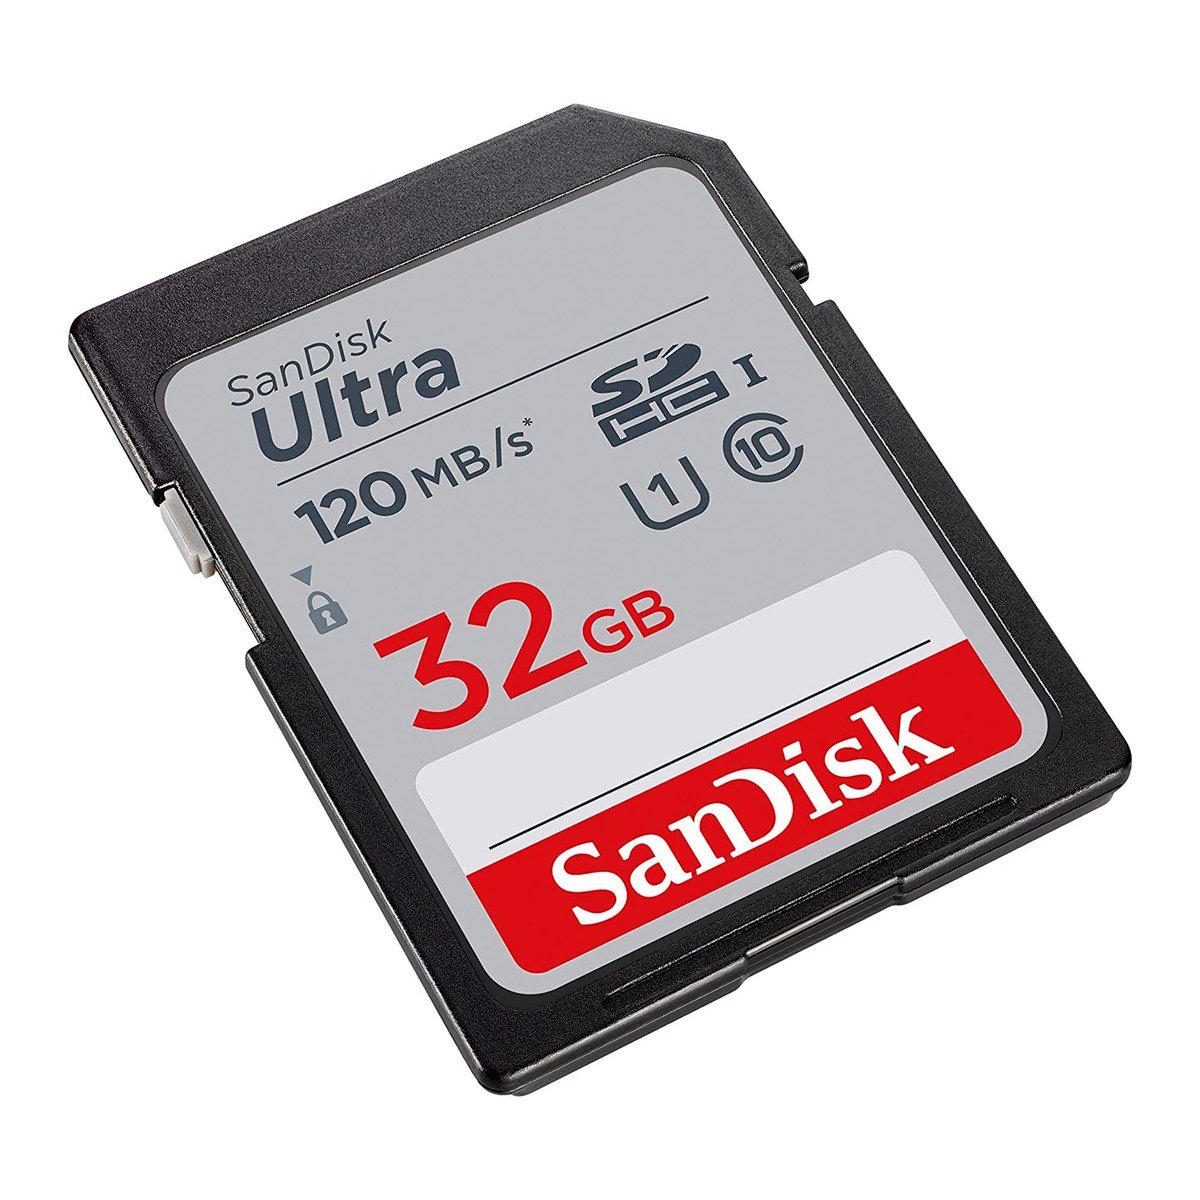 SanDisk Ultra SDHC Card SDSDUN4 32GB